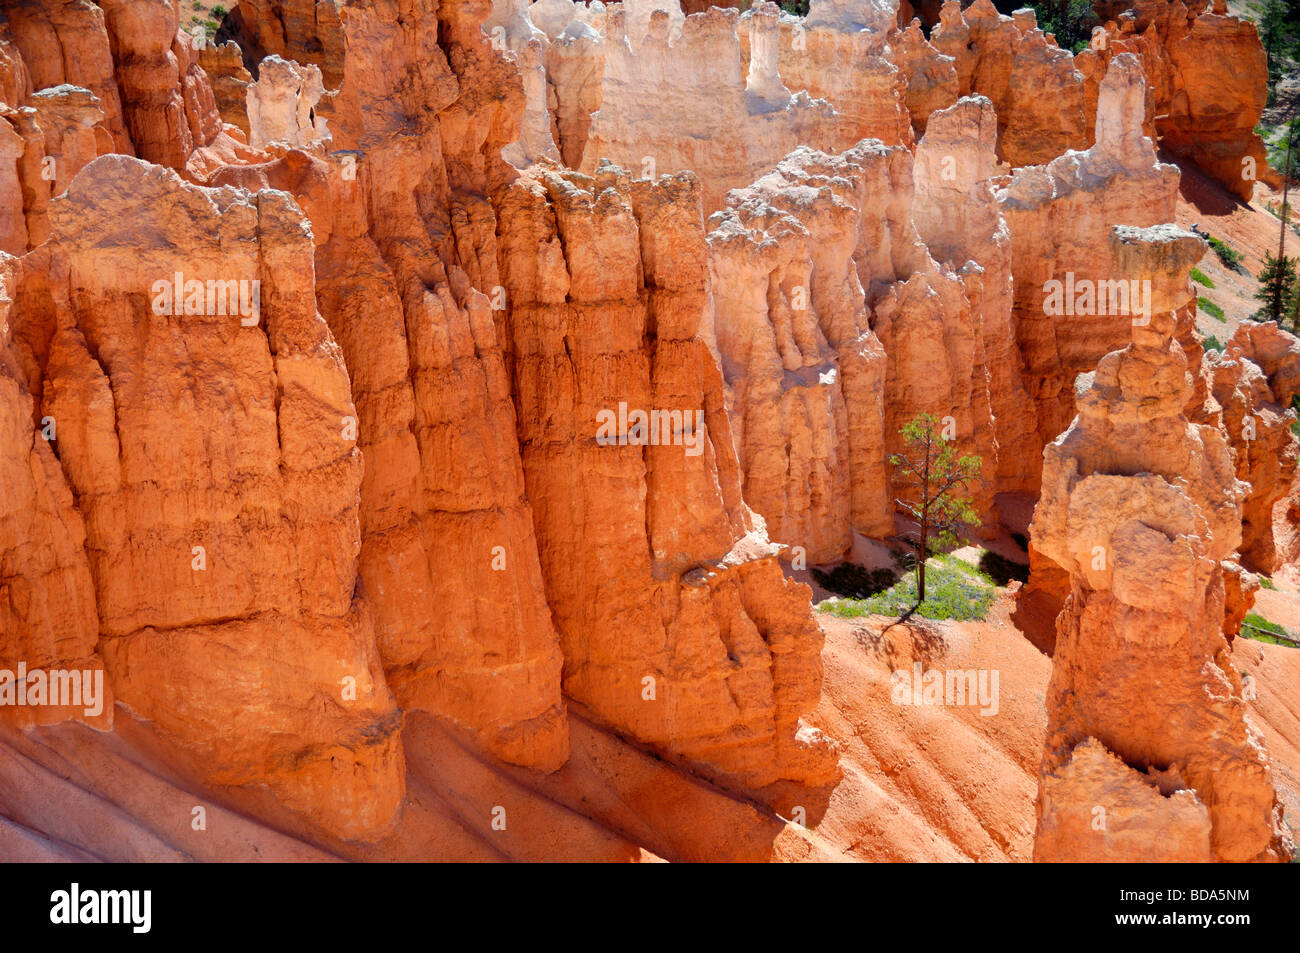 Rock formations at Bryce Canyon National Park dans l'Utah, USA Banque D'Images